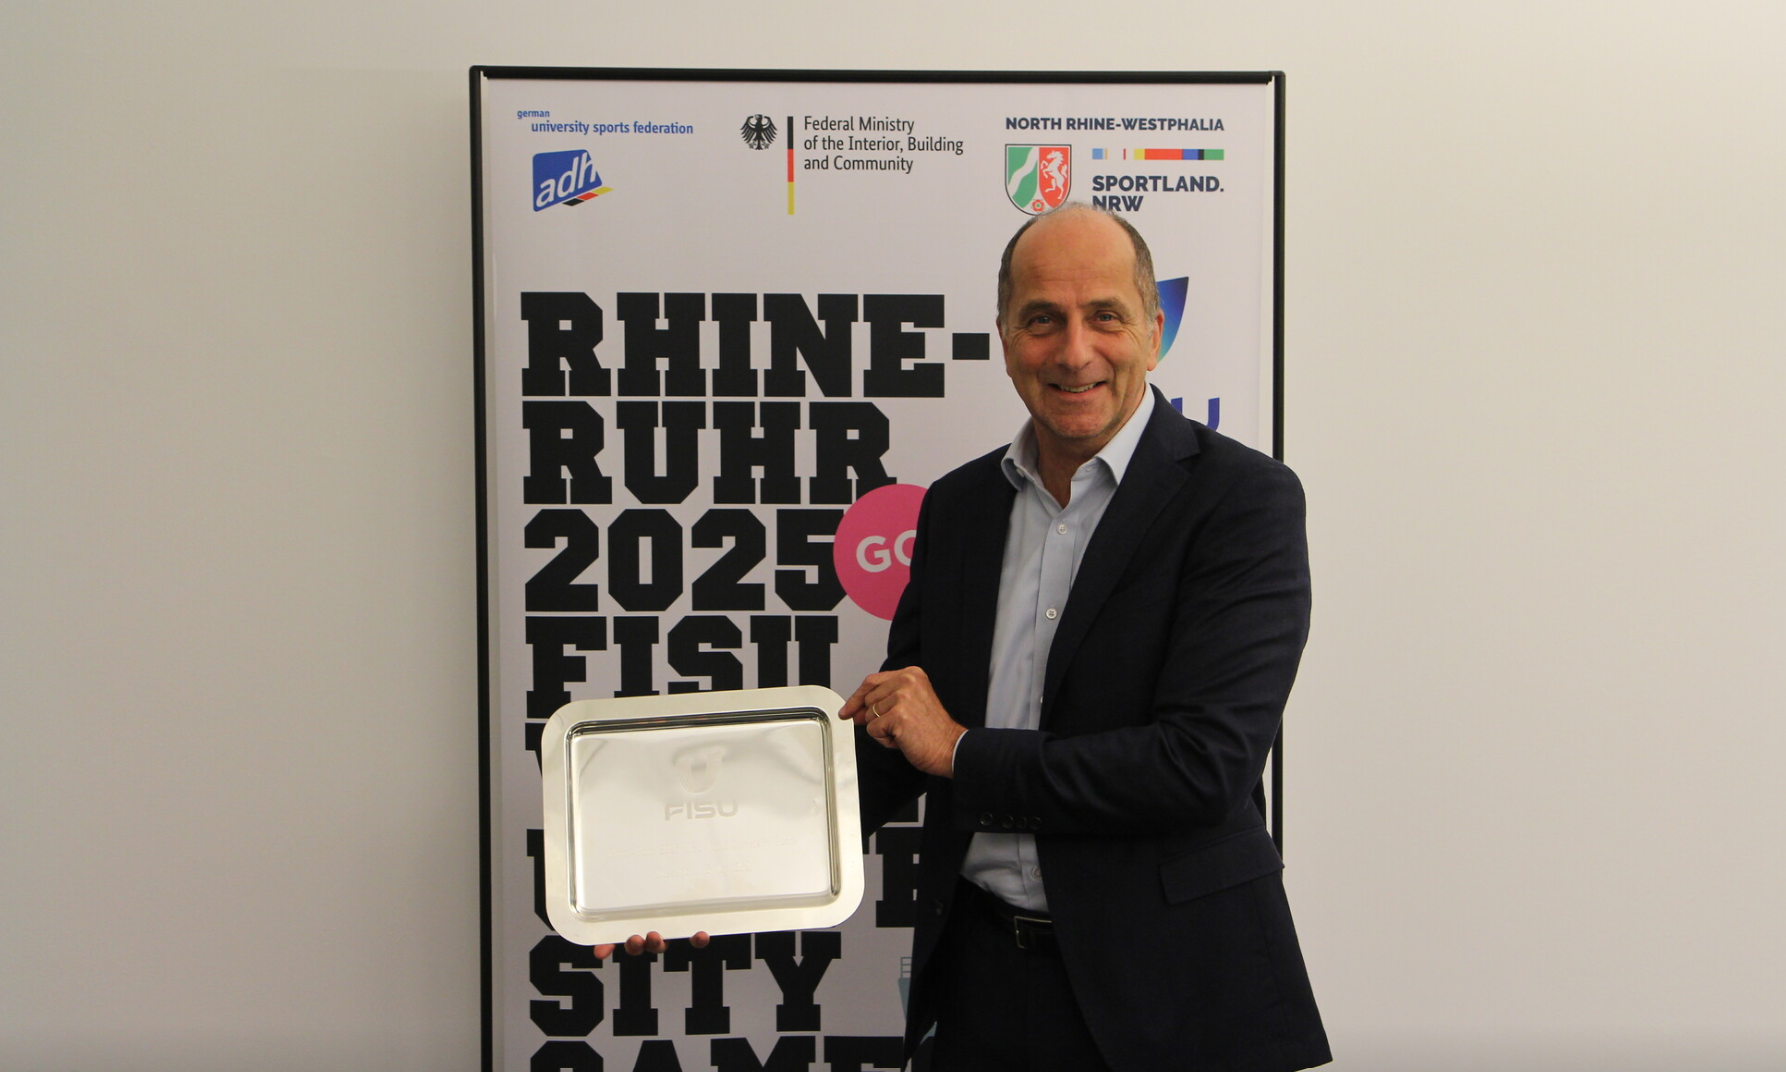 Rhine-Ruhr chief executive Stefan Kürten said that preparations are "well on track" for the 2025 FISU Games ©FISU